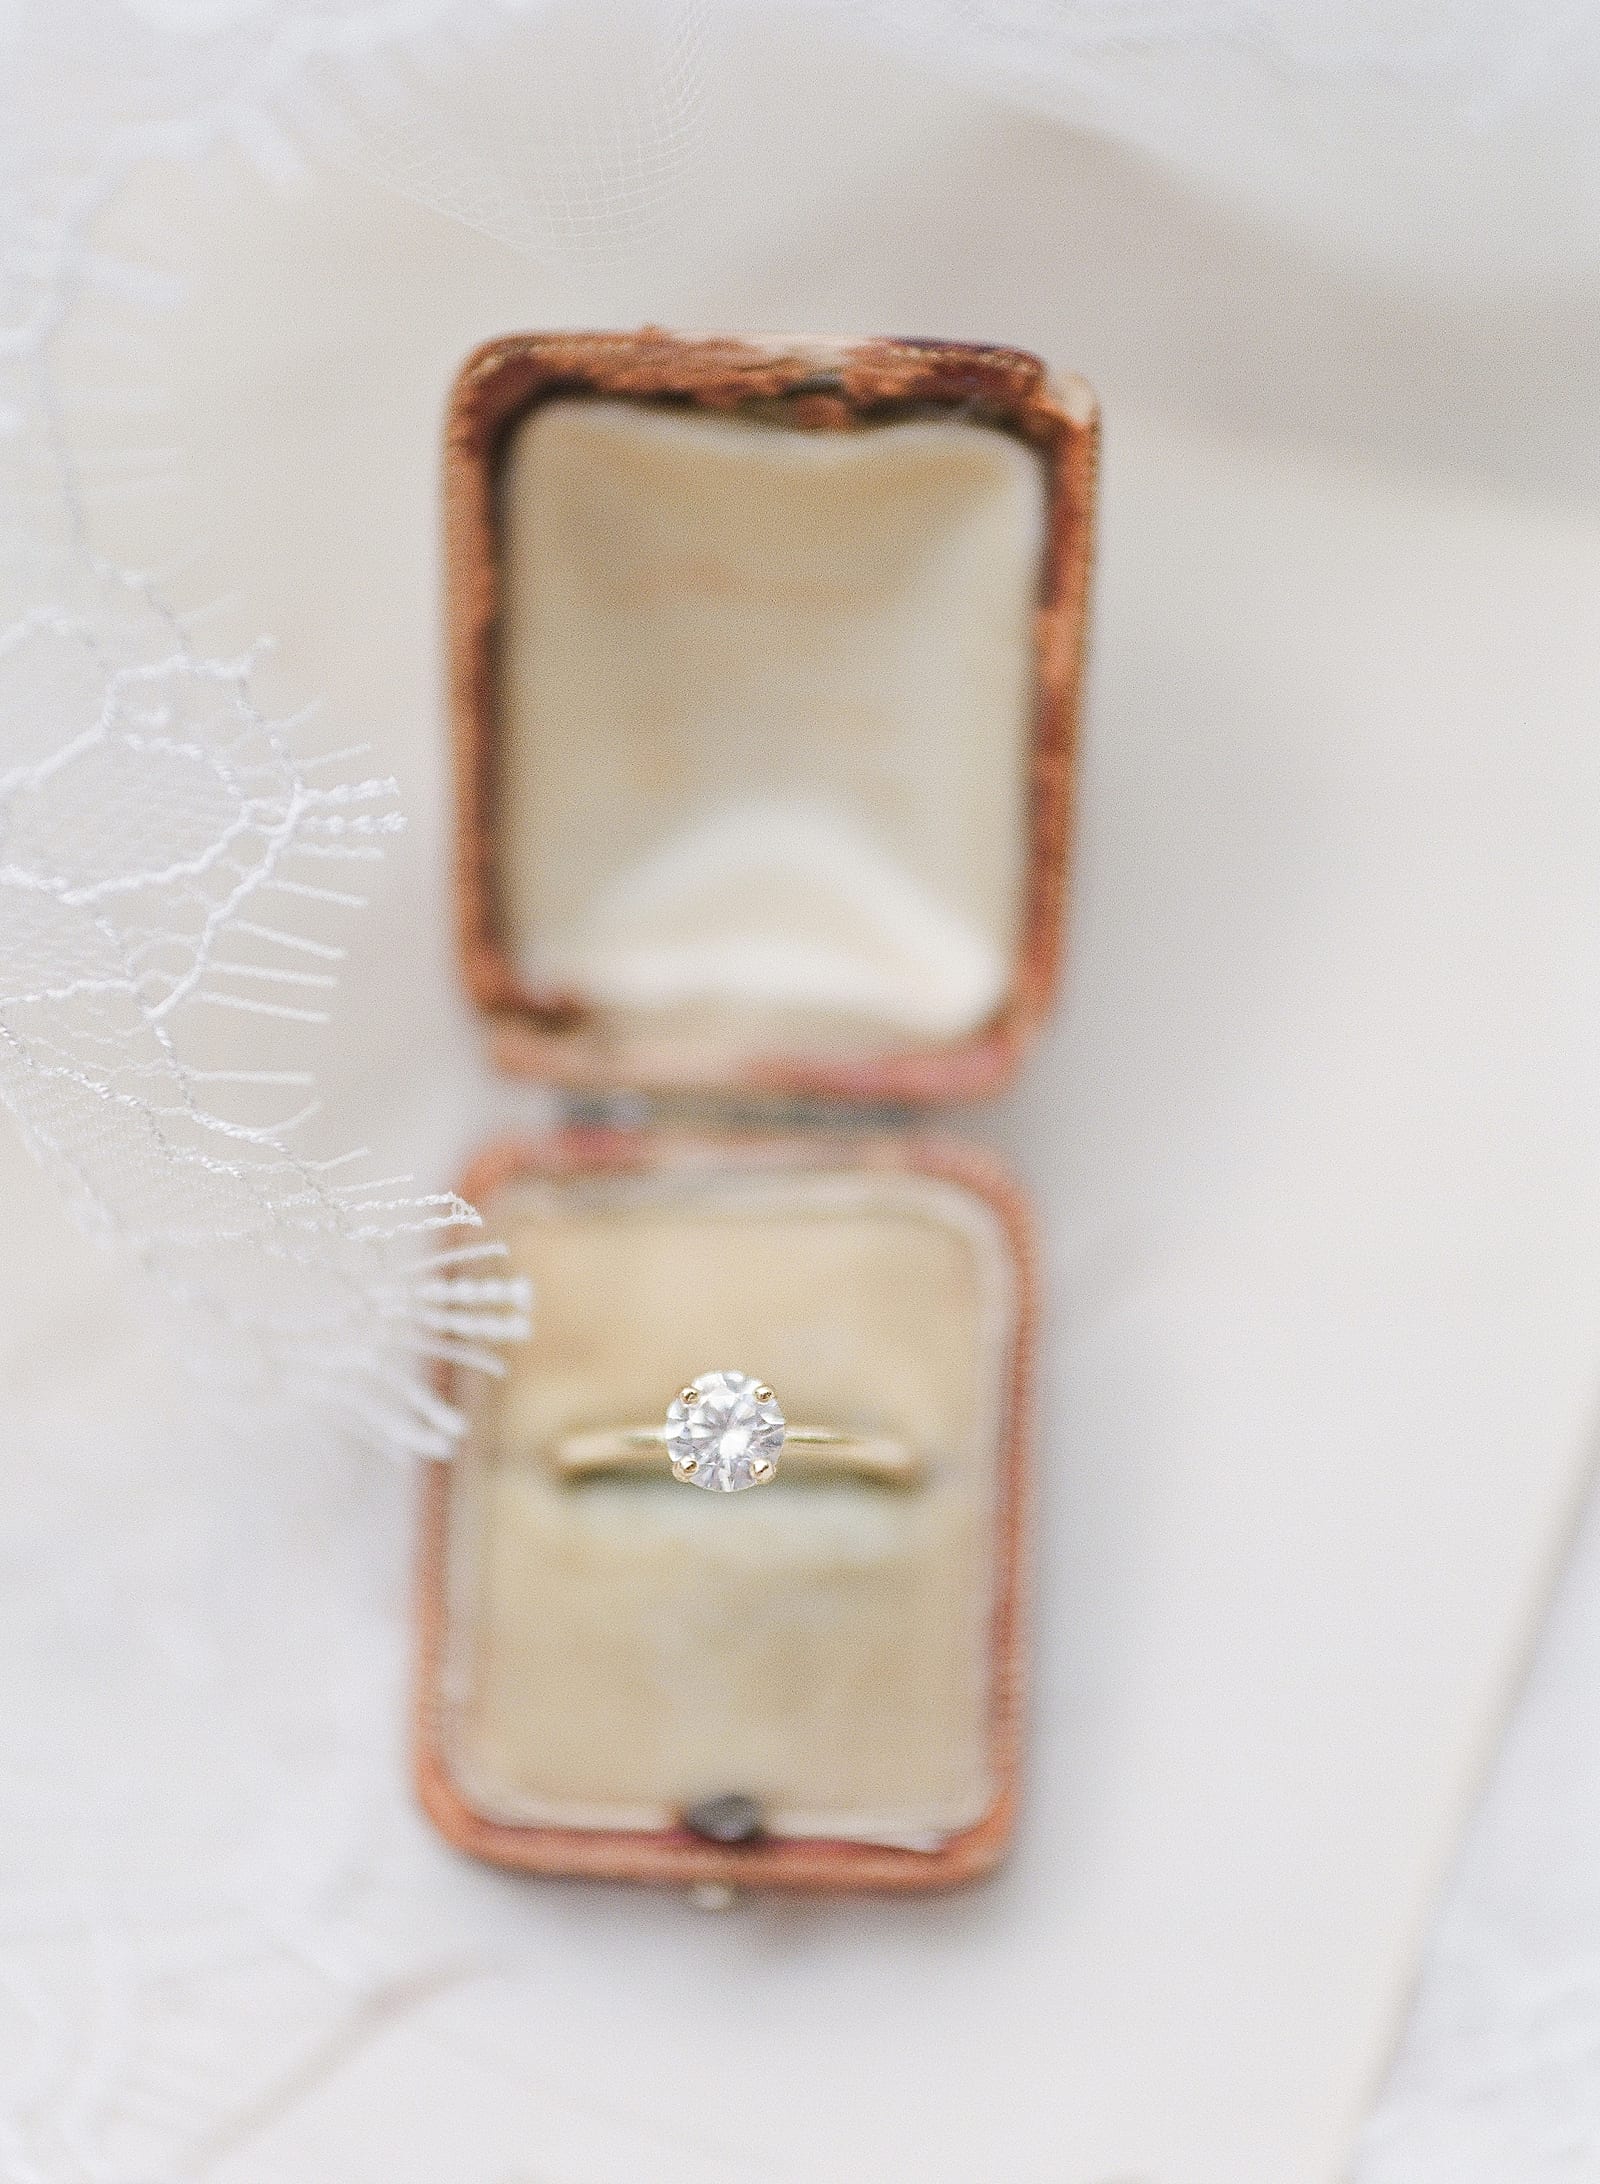 Wedding Ring in Vintage box Photo